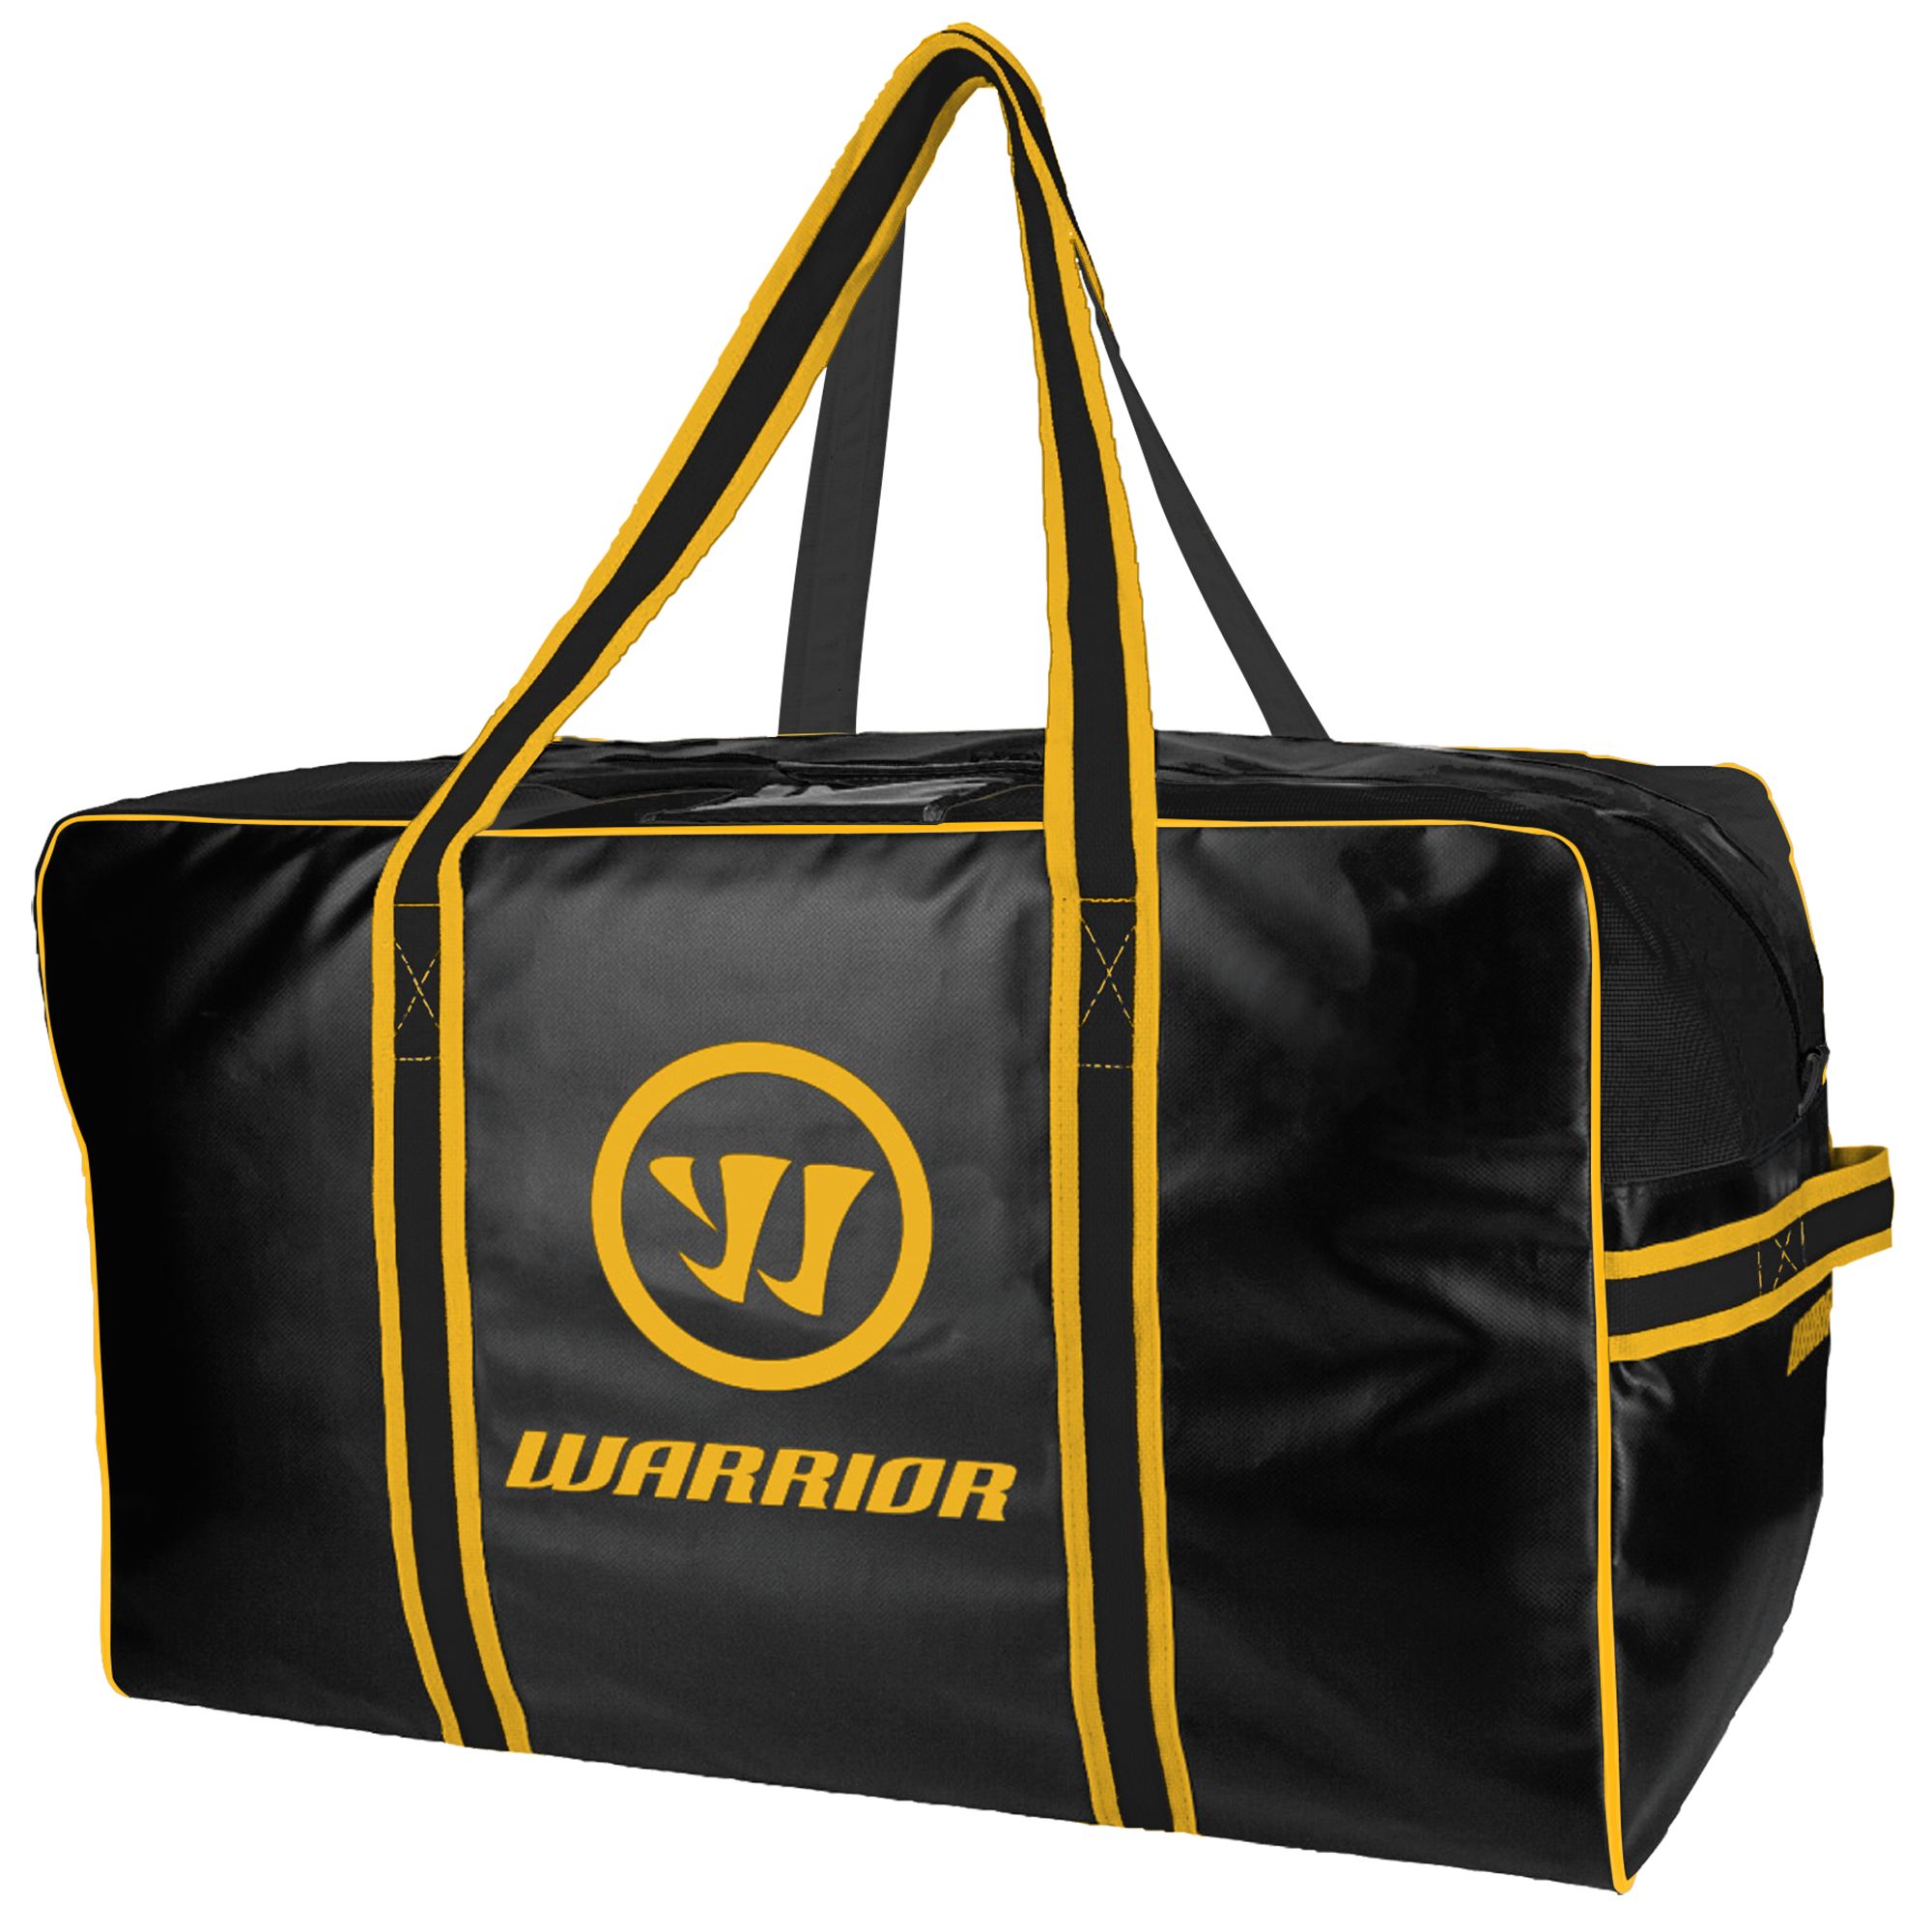 Warrior Pro Bag, Black with Sports Gold image number 1